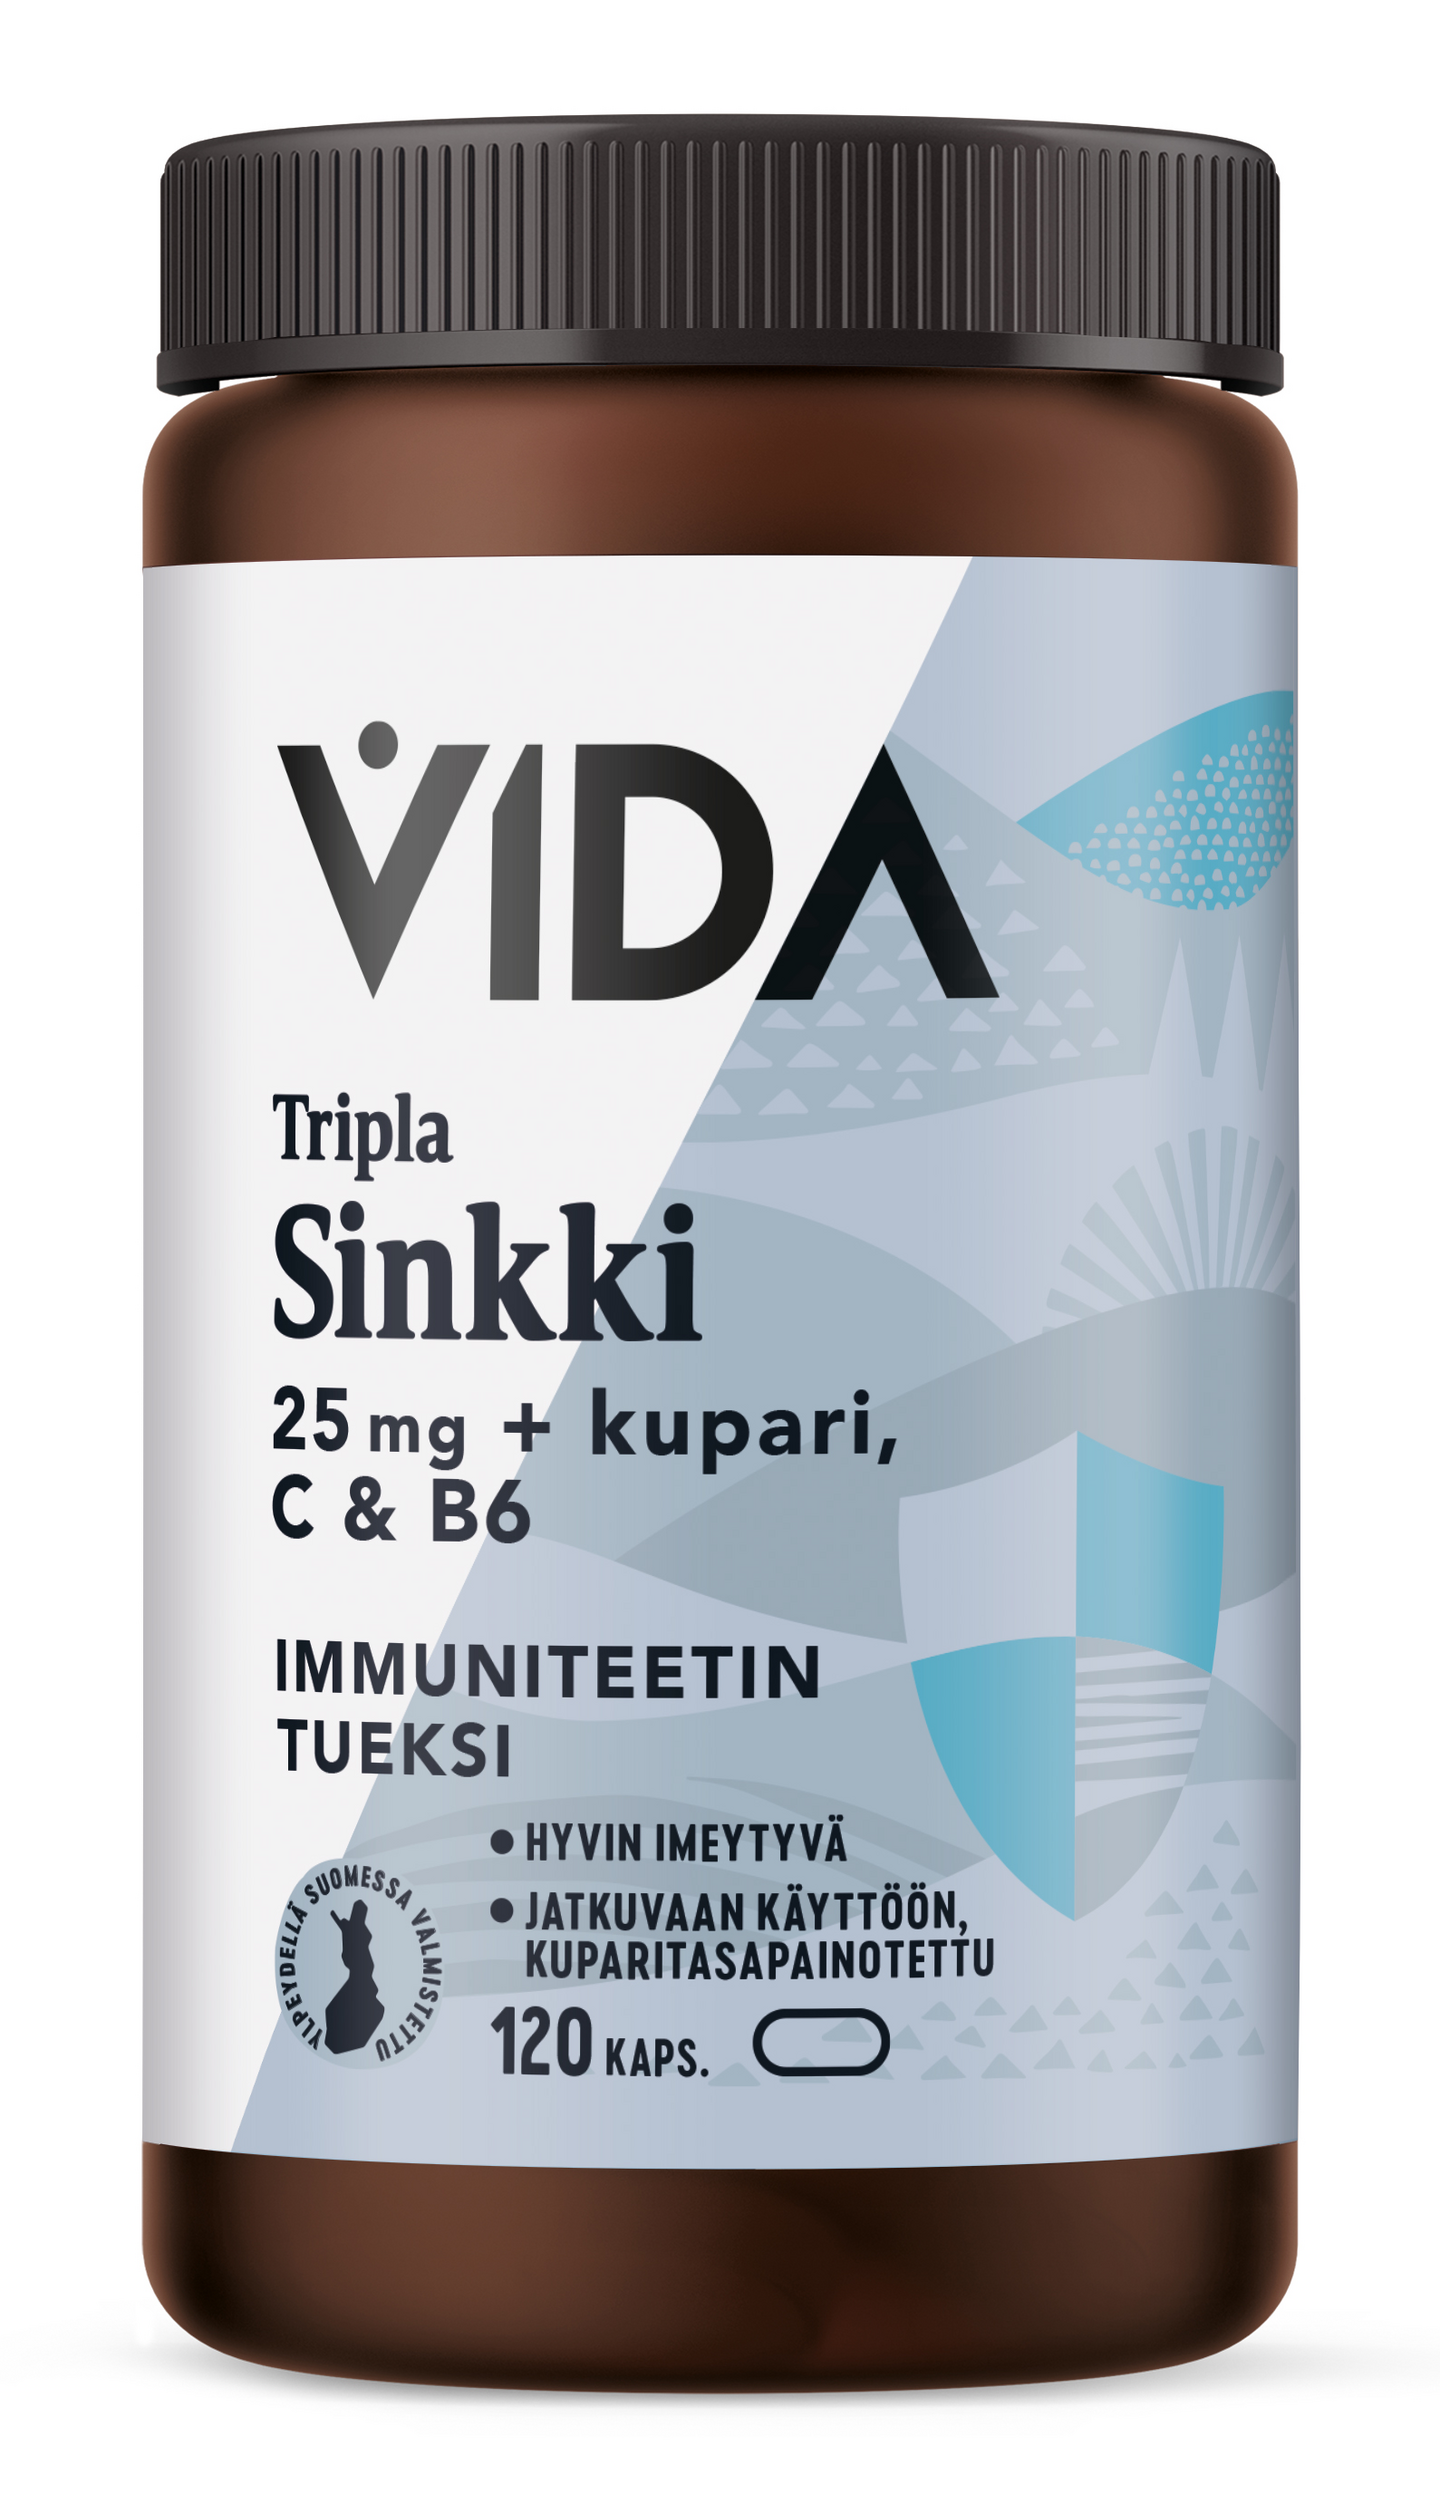 Vida Tripla Sinkki 25 mg + kupari, C & B6 120 kaps. 60g